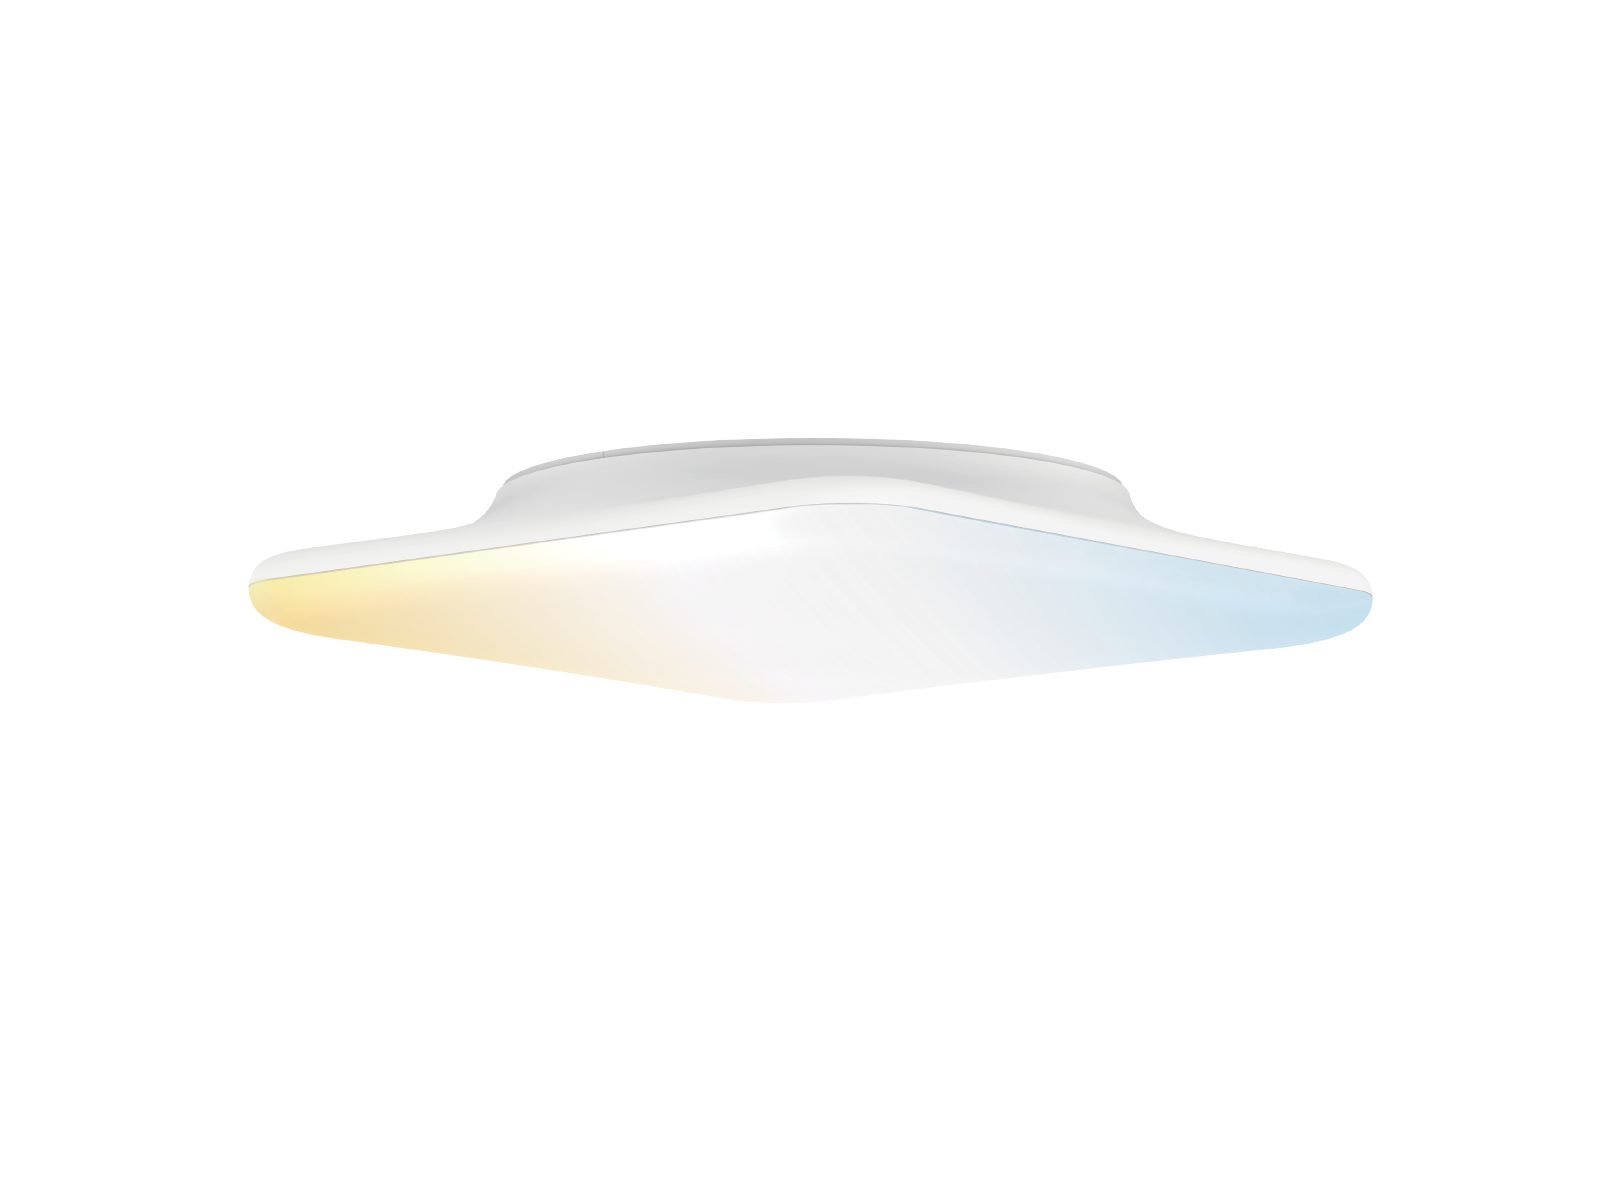 AL47-W/B (Square) Pper Slim Design LED Ceiling Light